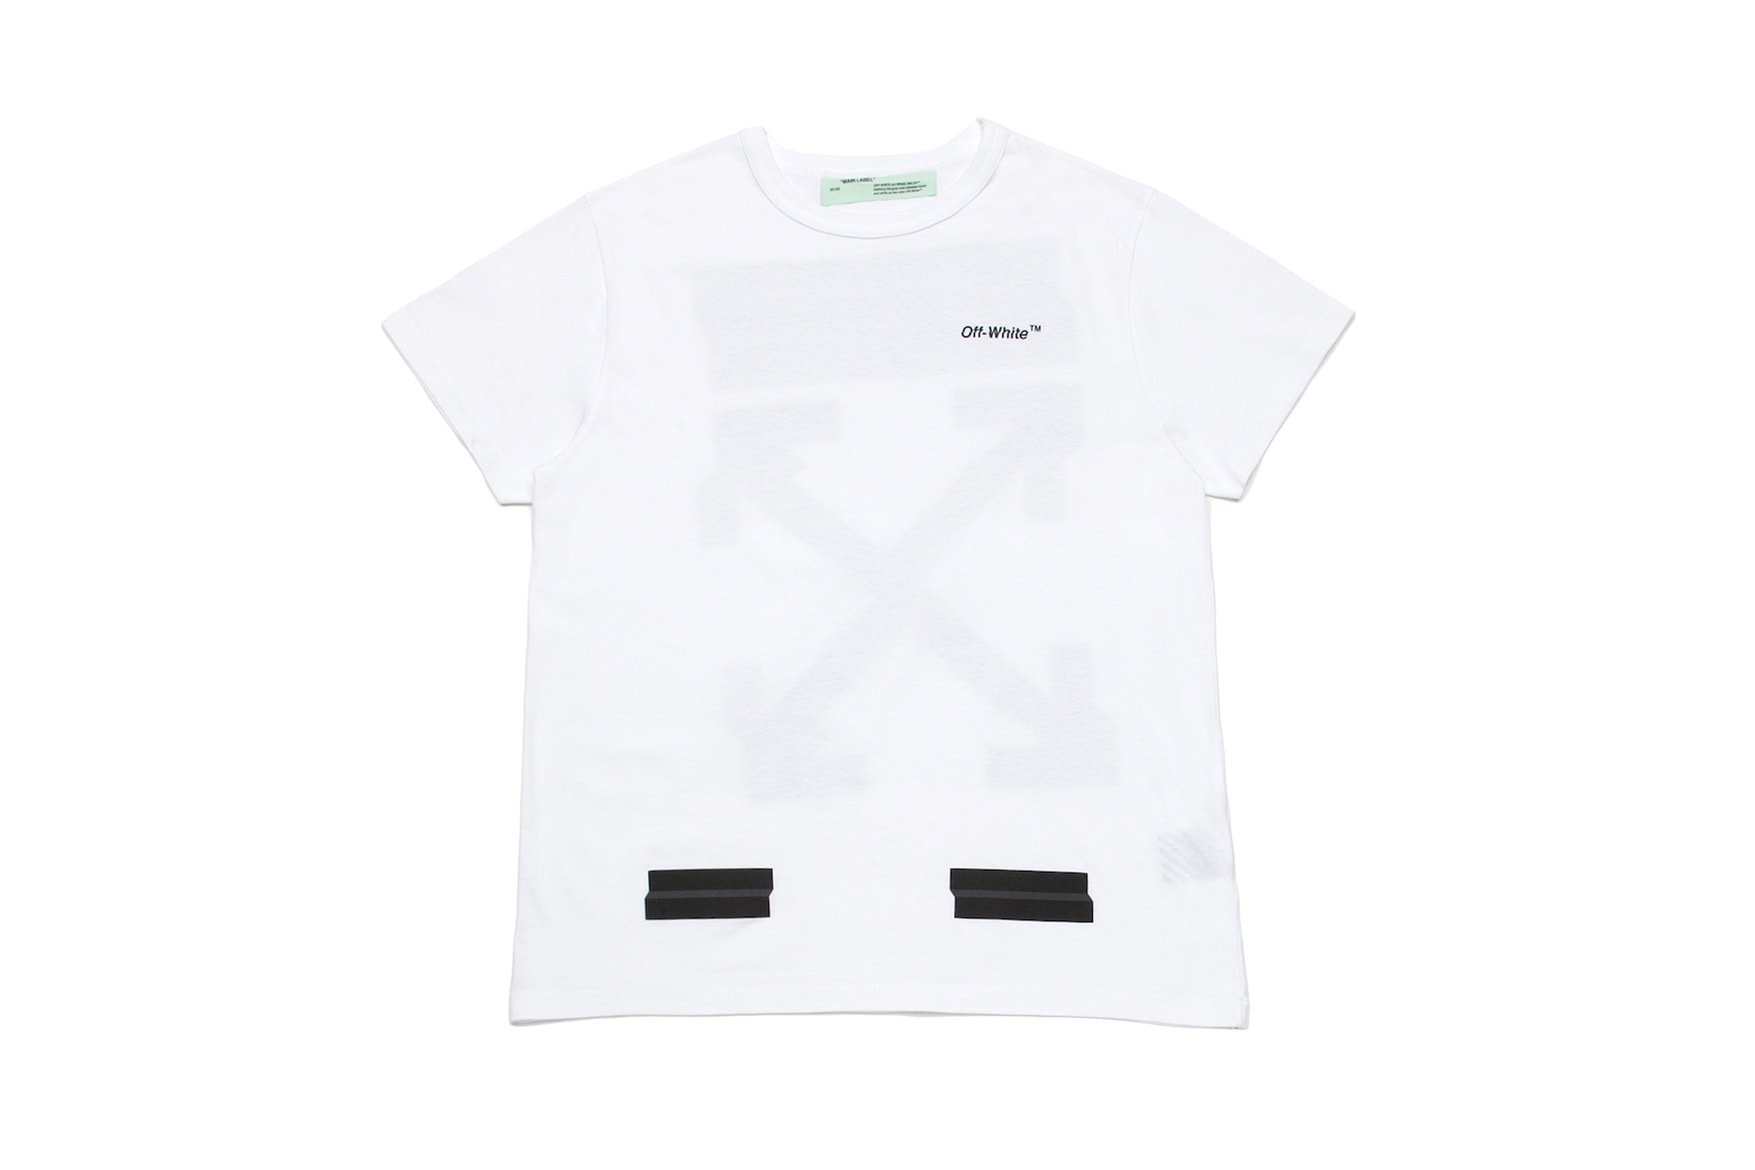 OFF-WHITE c/o VIRGIL ABLOH Hong Kong Exclusive Items Binder Clip Handbag T-shirt Hoodie Jeans